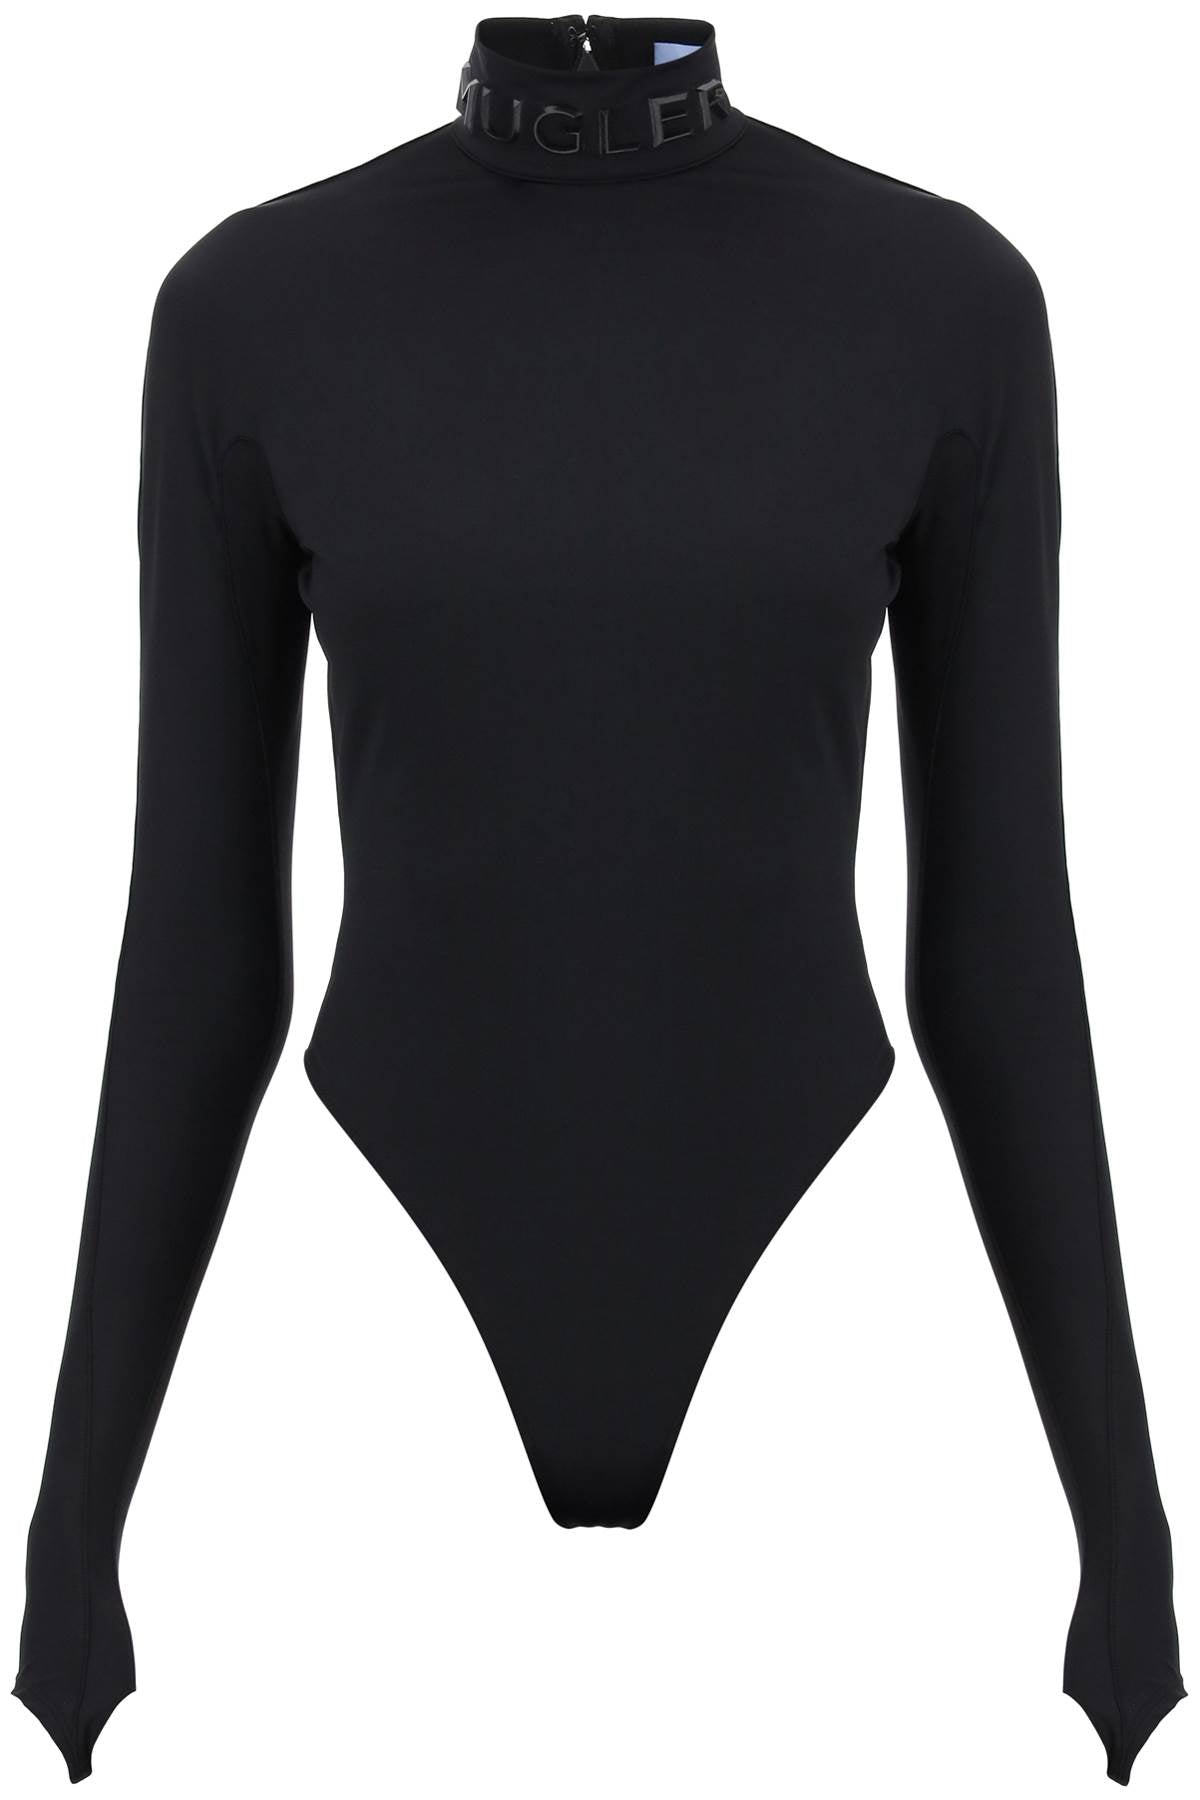 Mugler bodysuit with stand collar BO0212842 BLACK